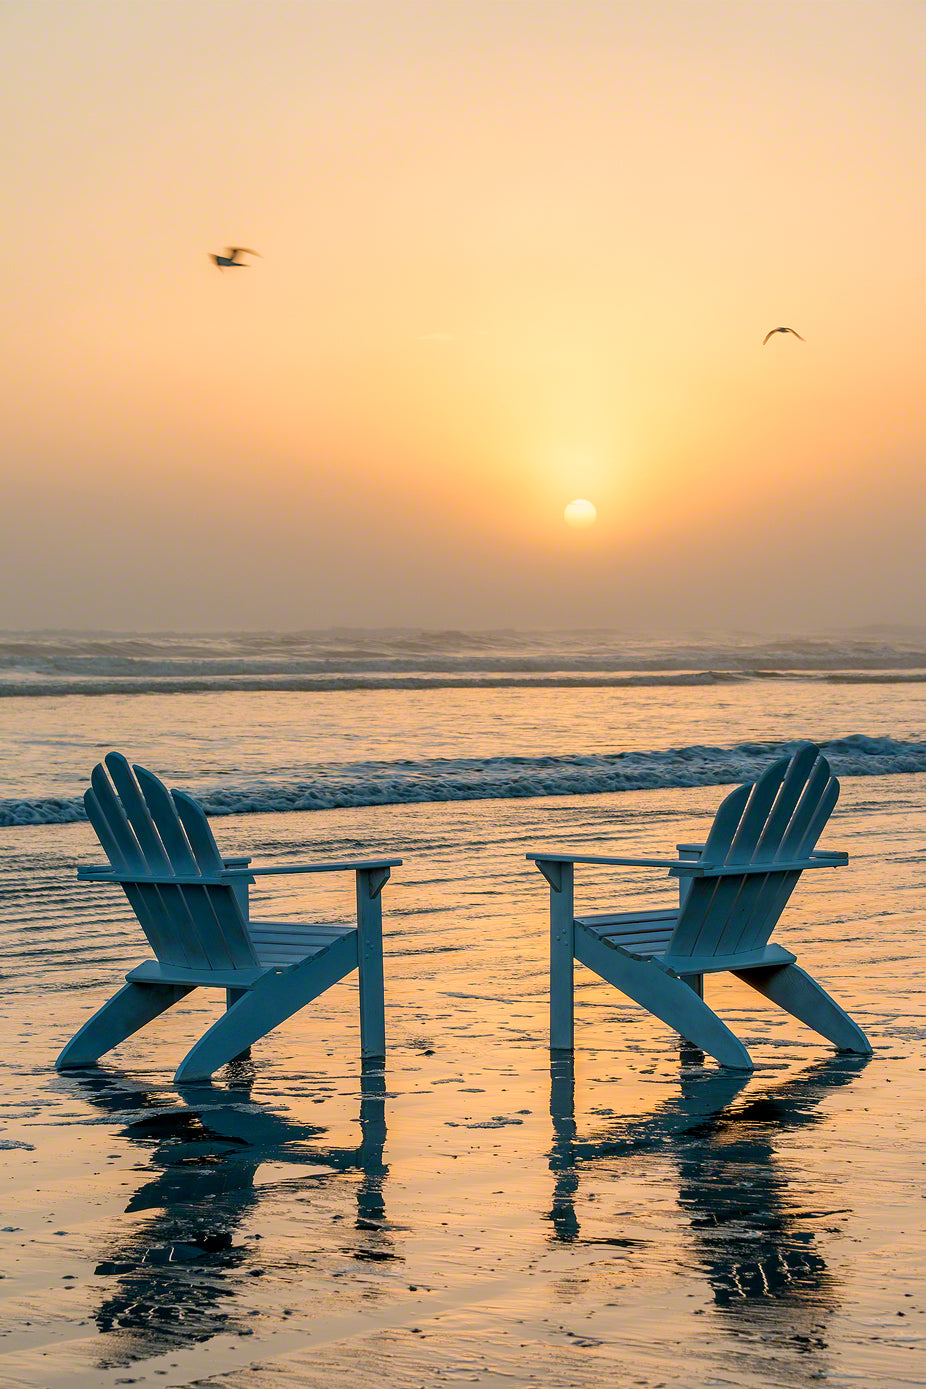 adirondack chairs on beach sunset